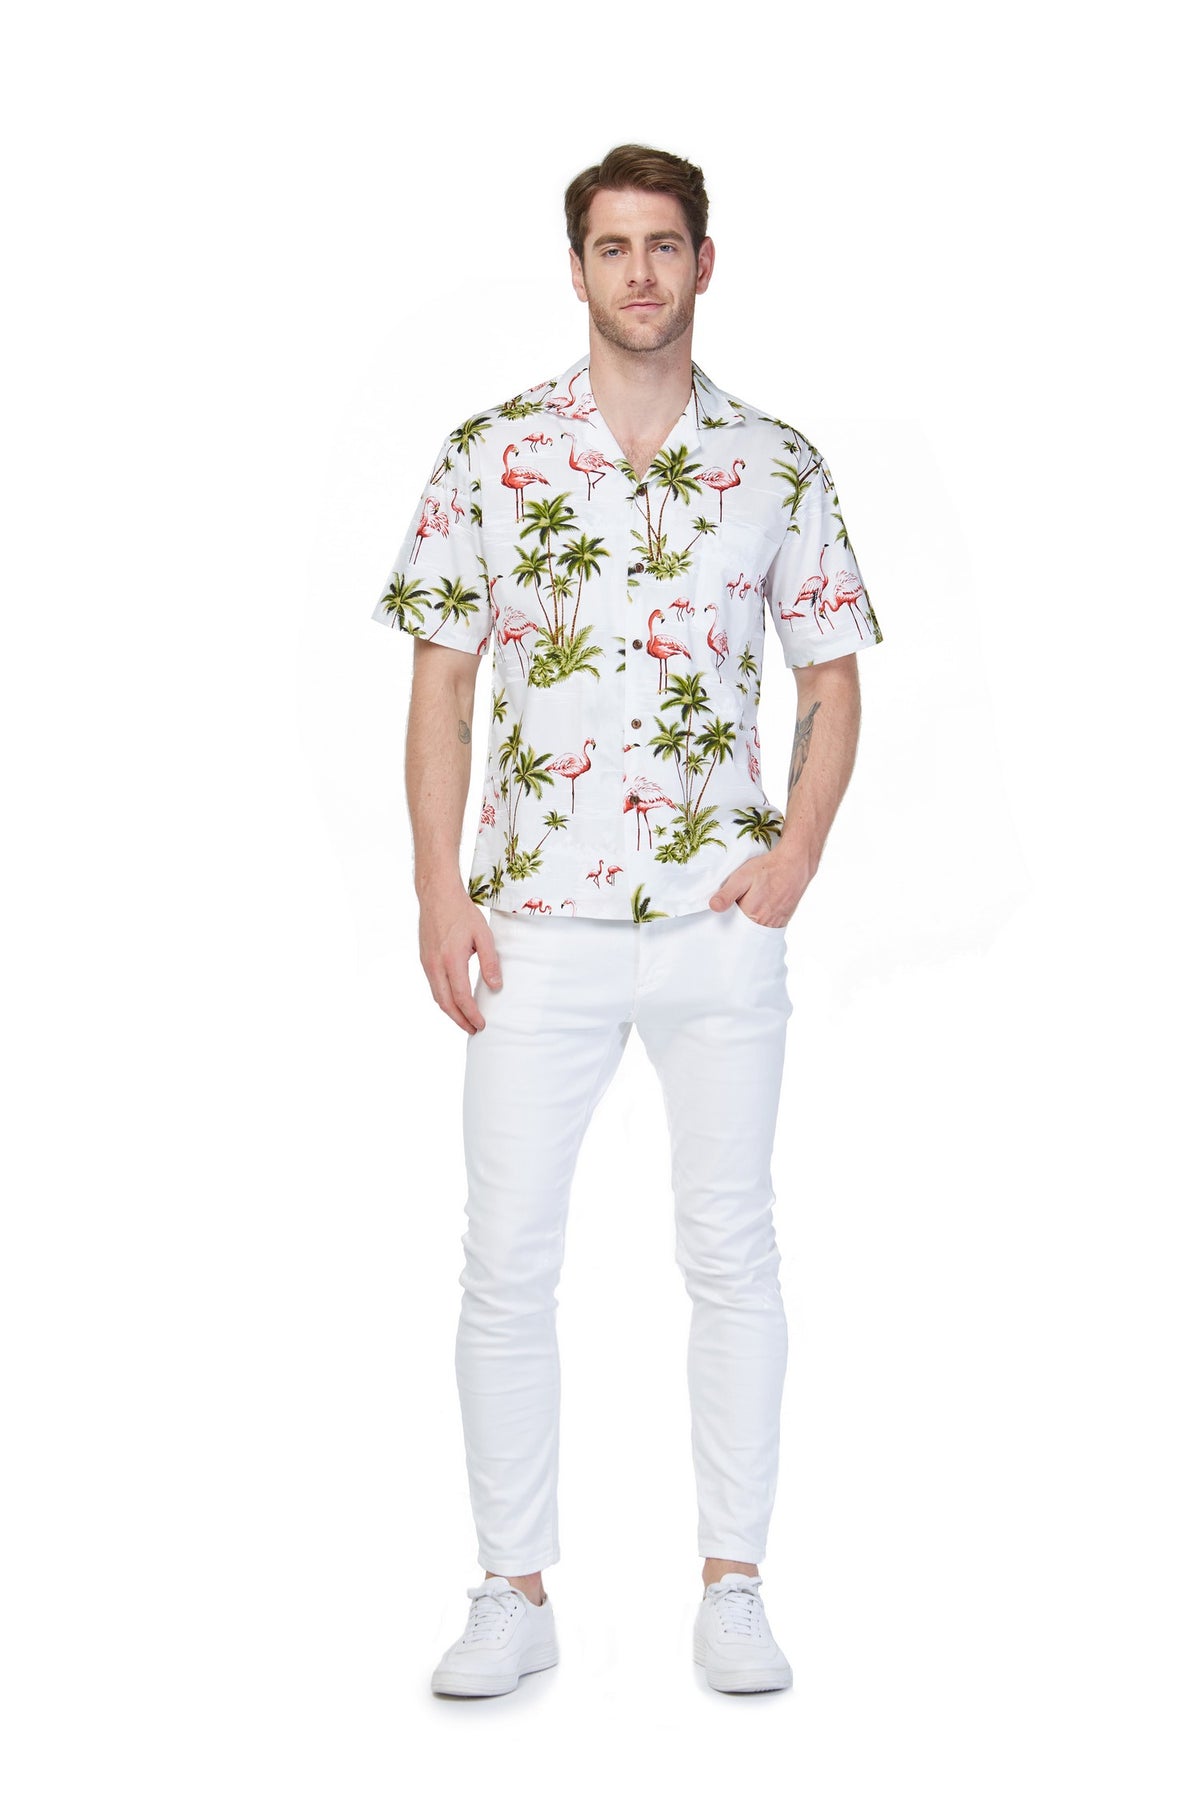 Made in Hawaii Men's Hawaiian Shirt Aloha Shirt 2XL White Flamingos ...